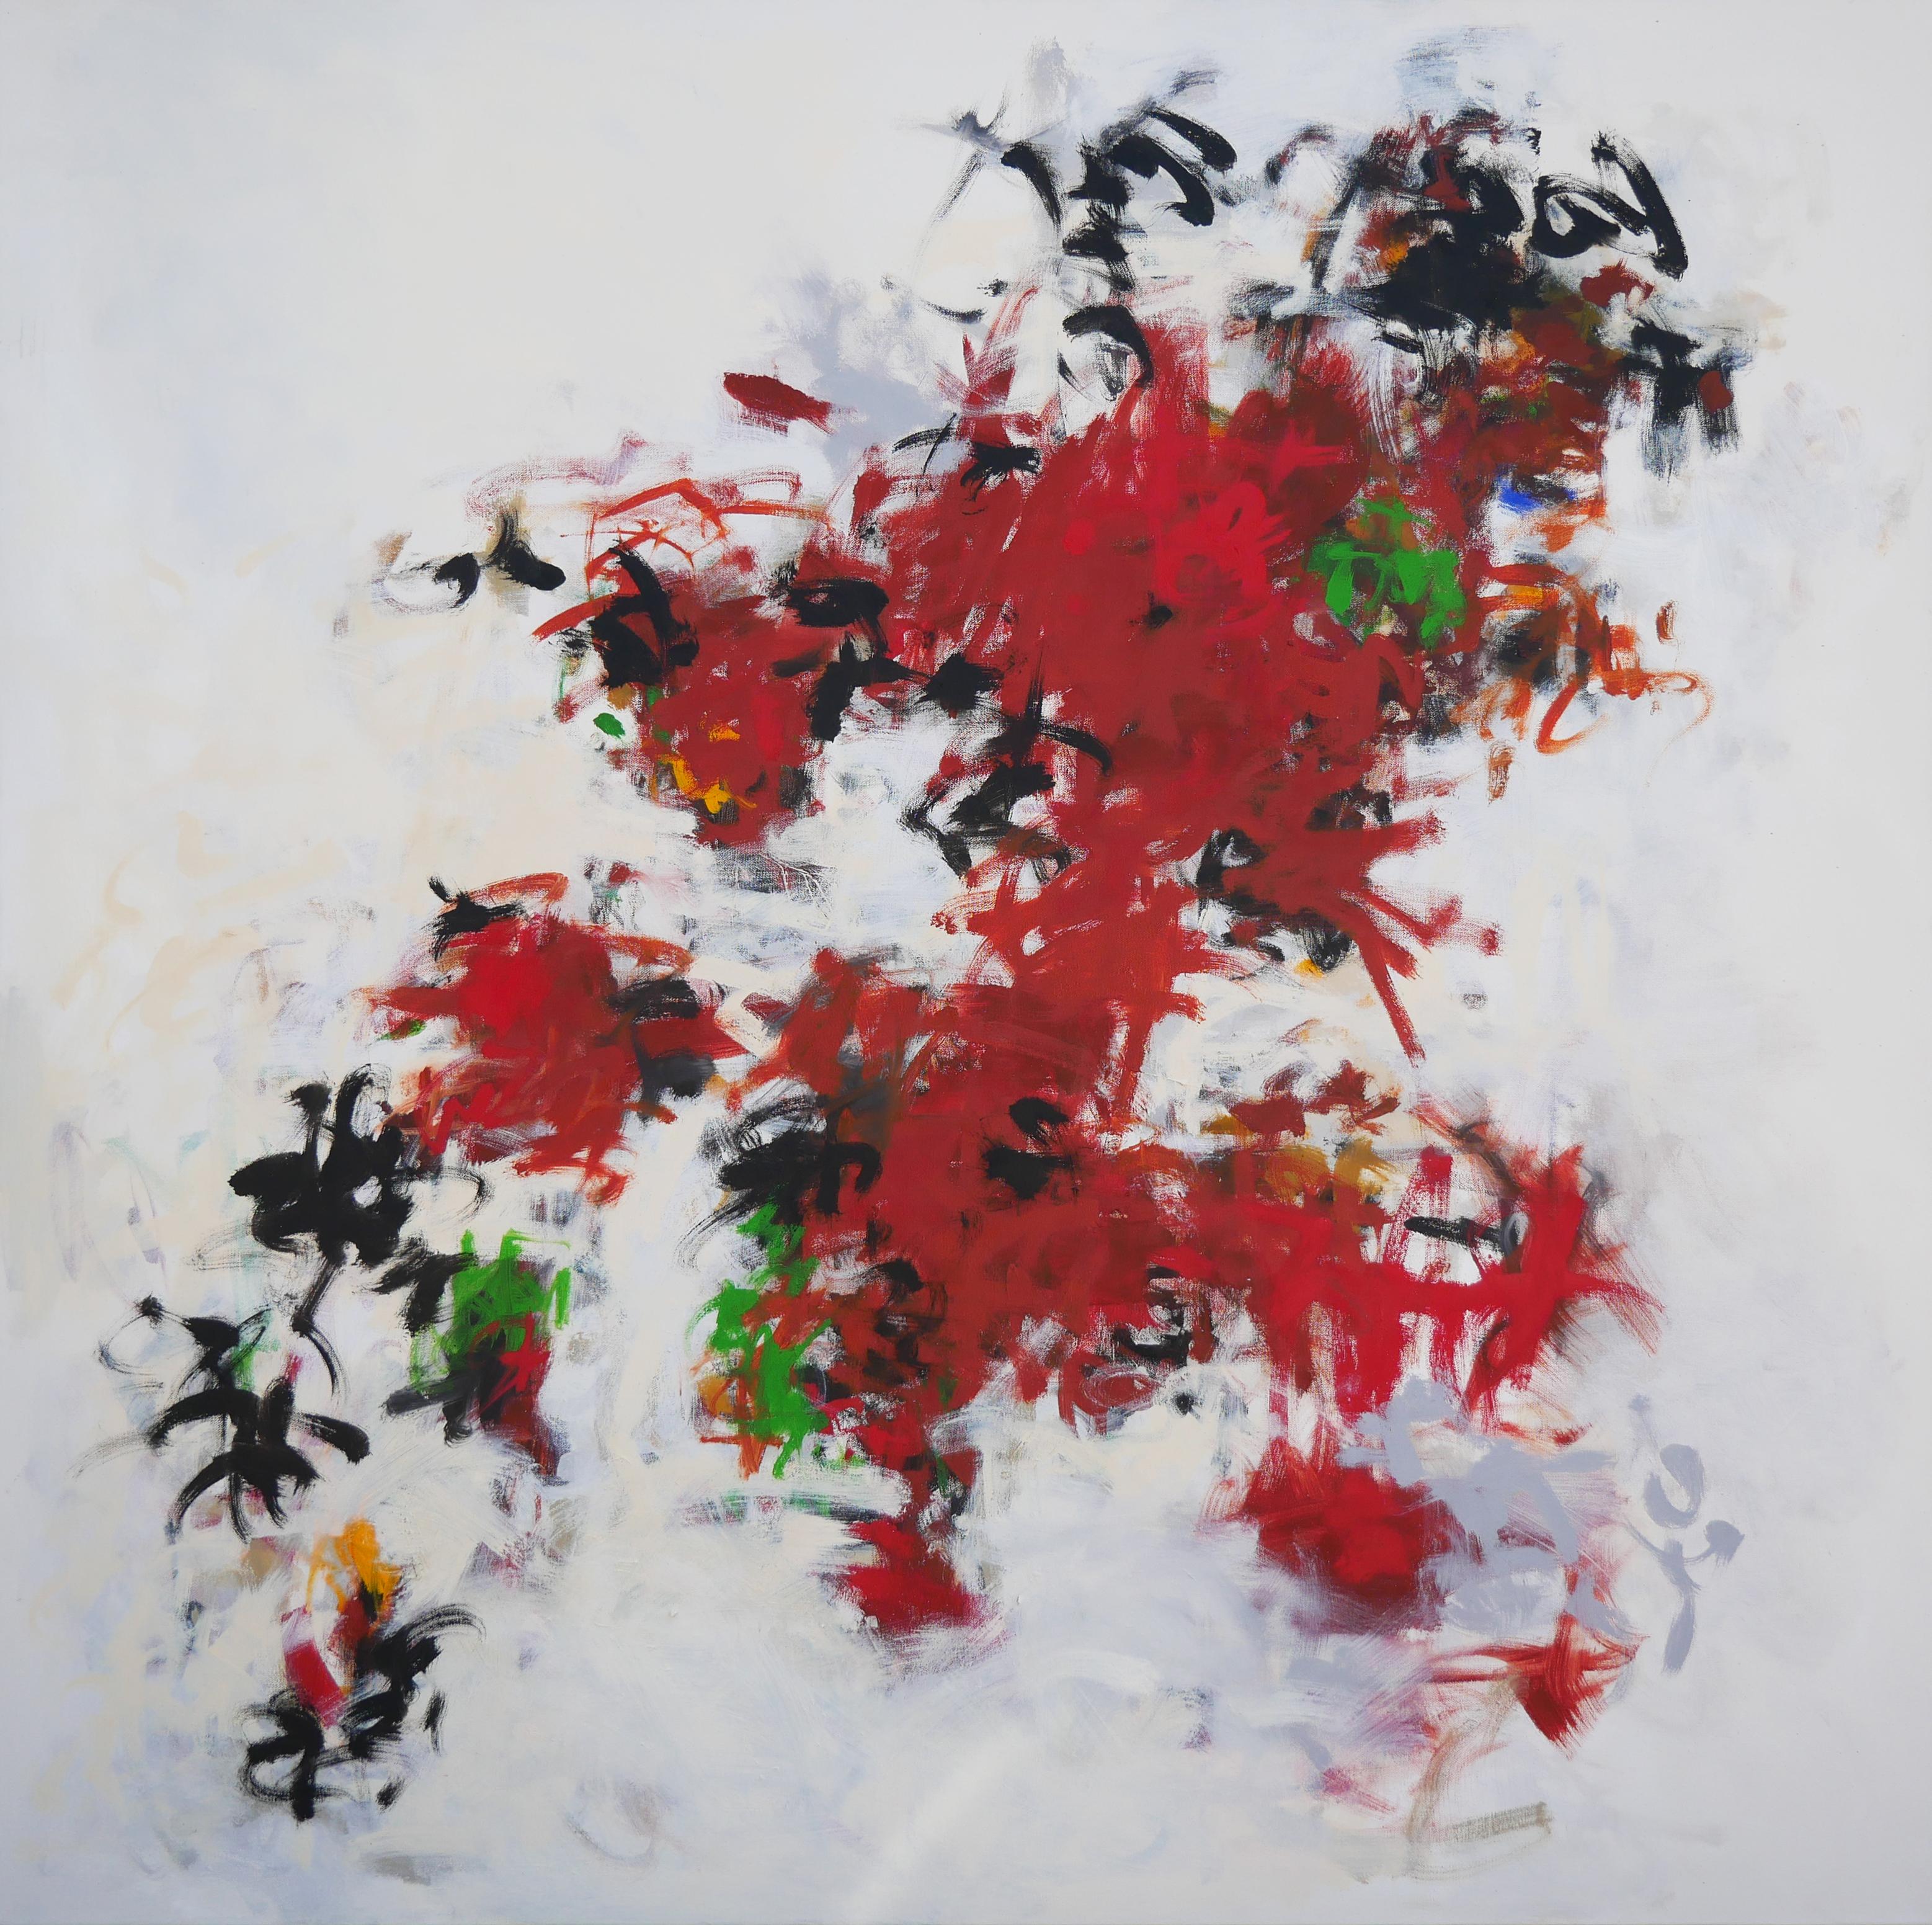 Abstract Painting Gerald Syler - « Untitled 80 » - Grande peinture expressionniste abstraite rouge, noire et verte